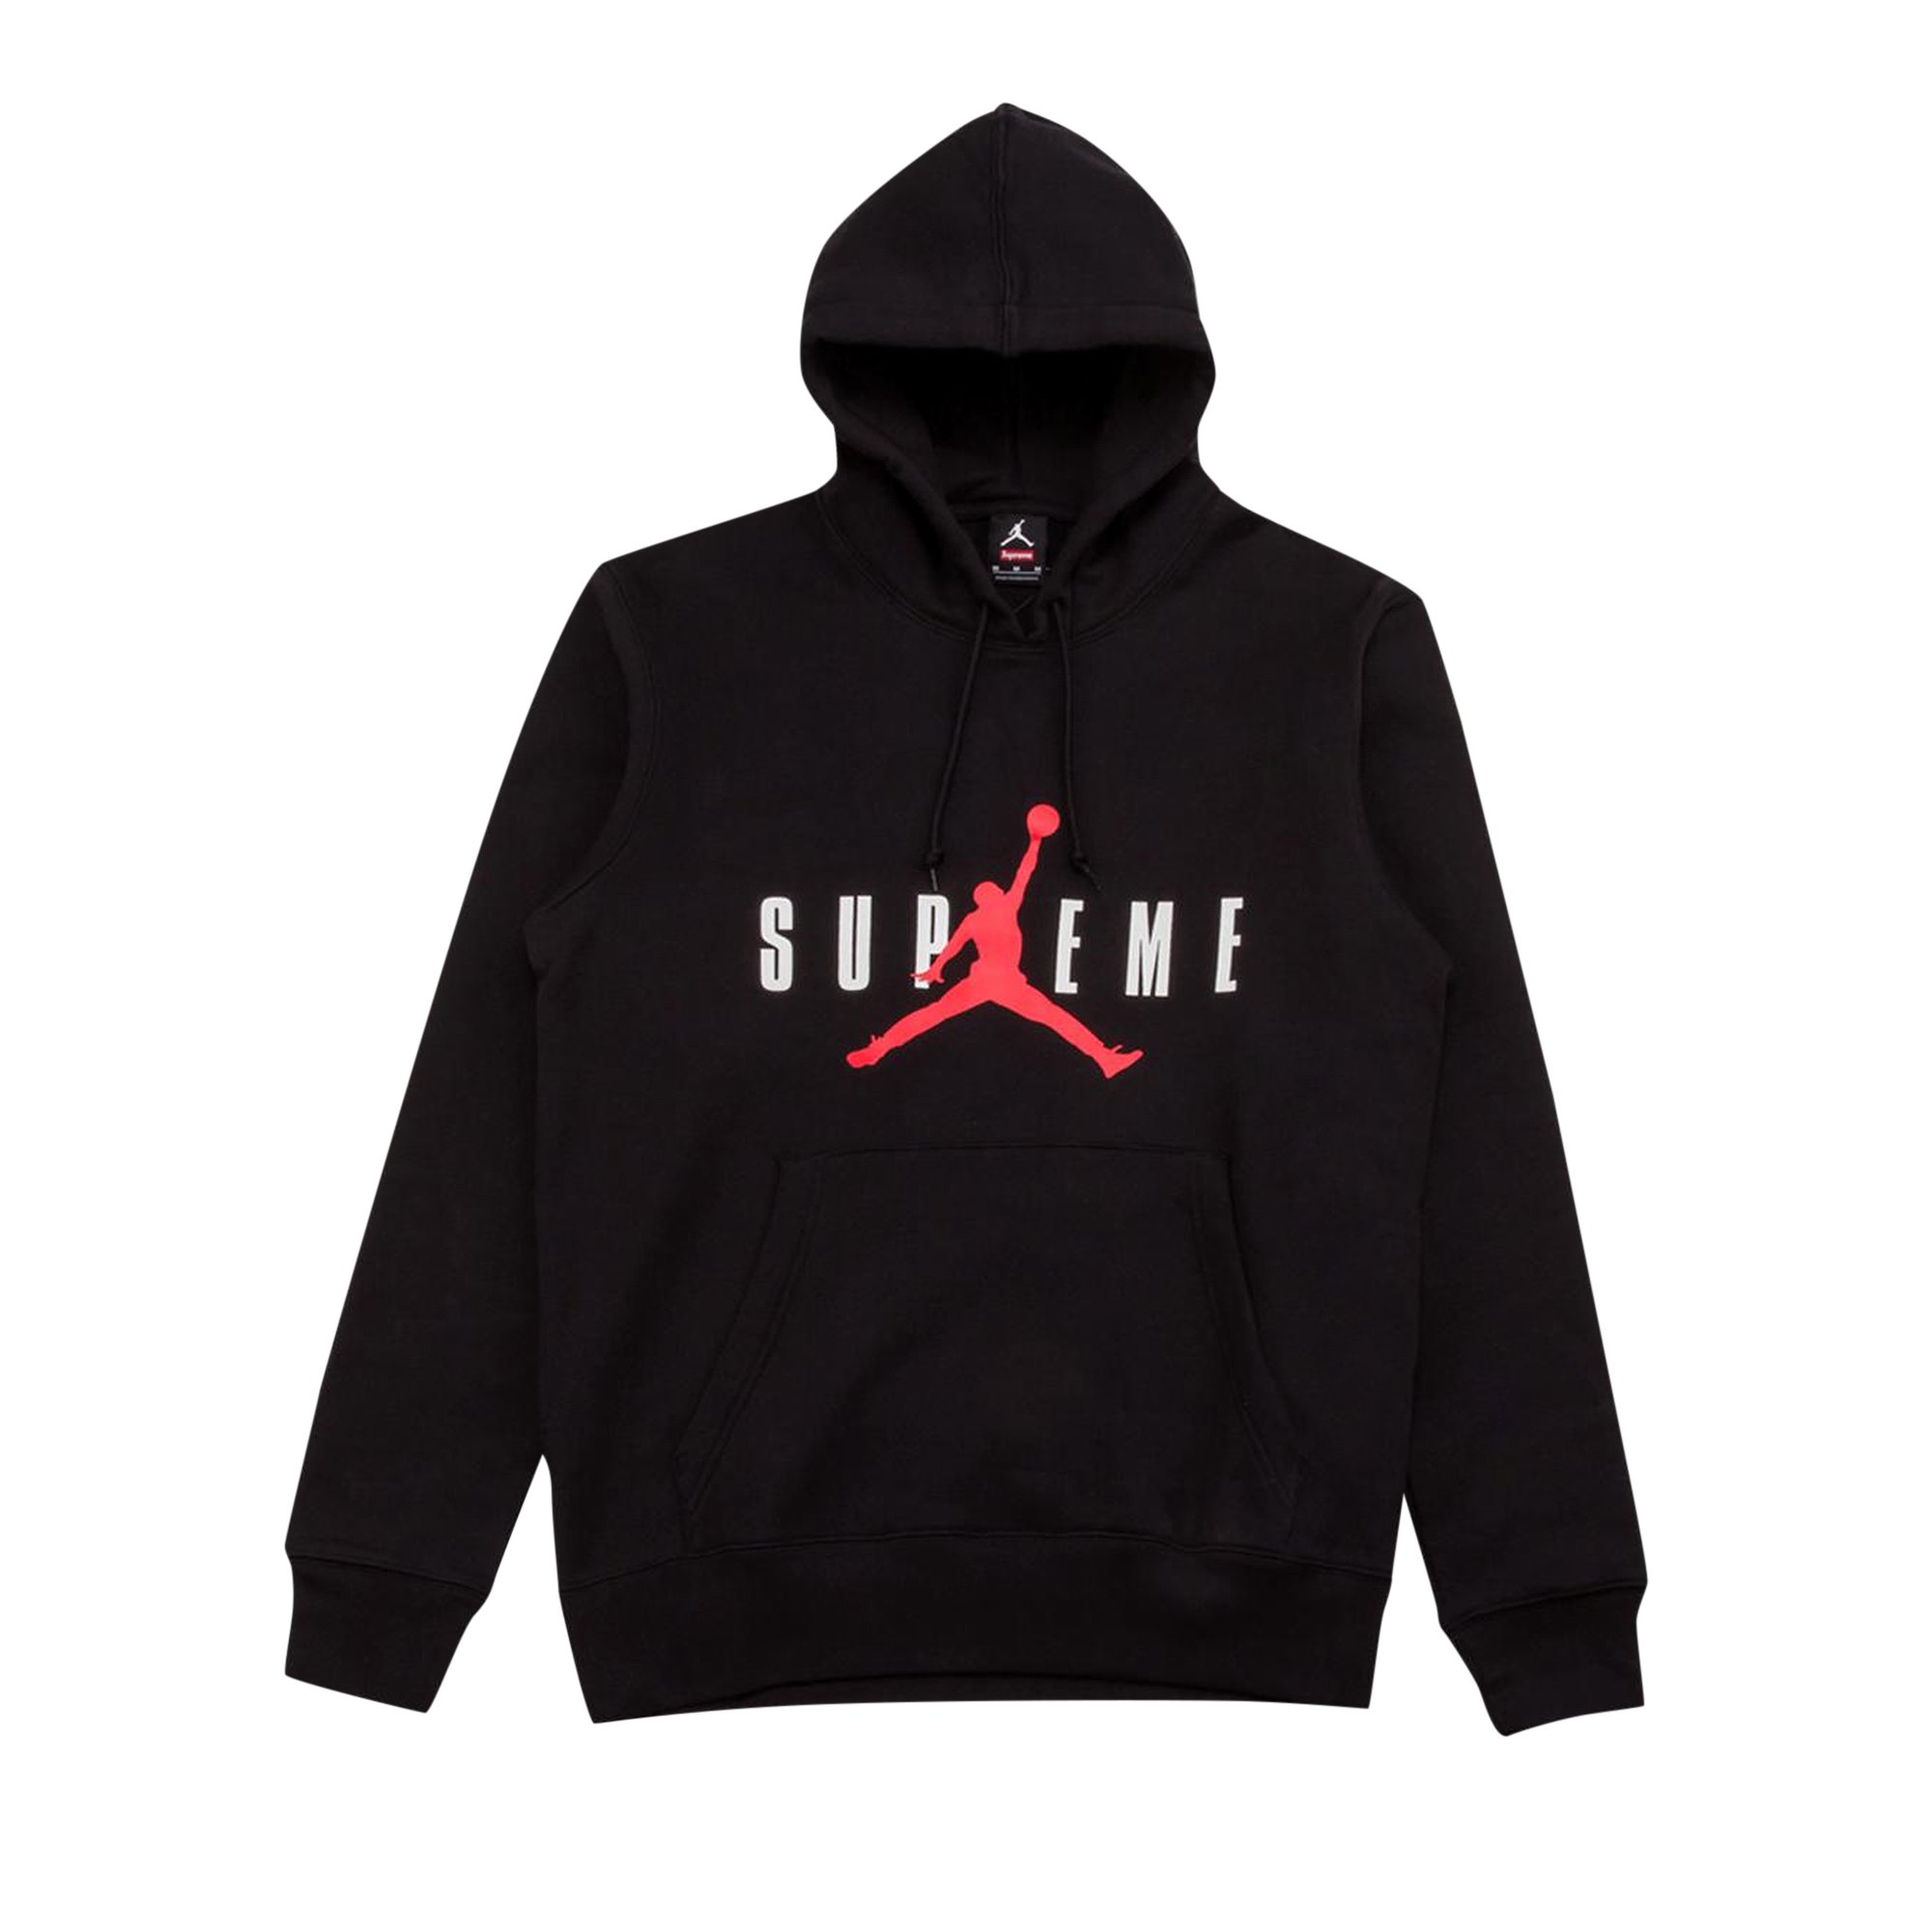 Supreme Jordan Hooded Sweatshirt Black L